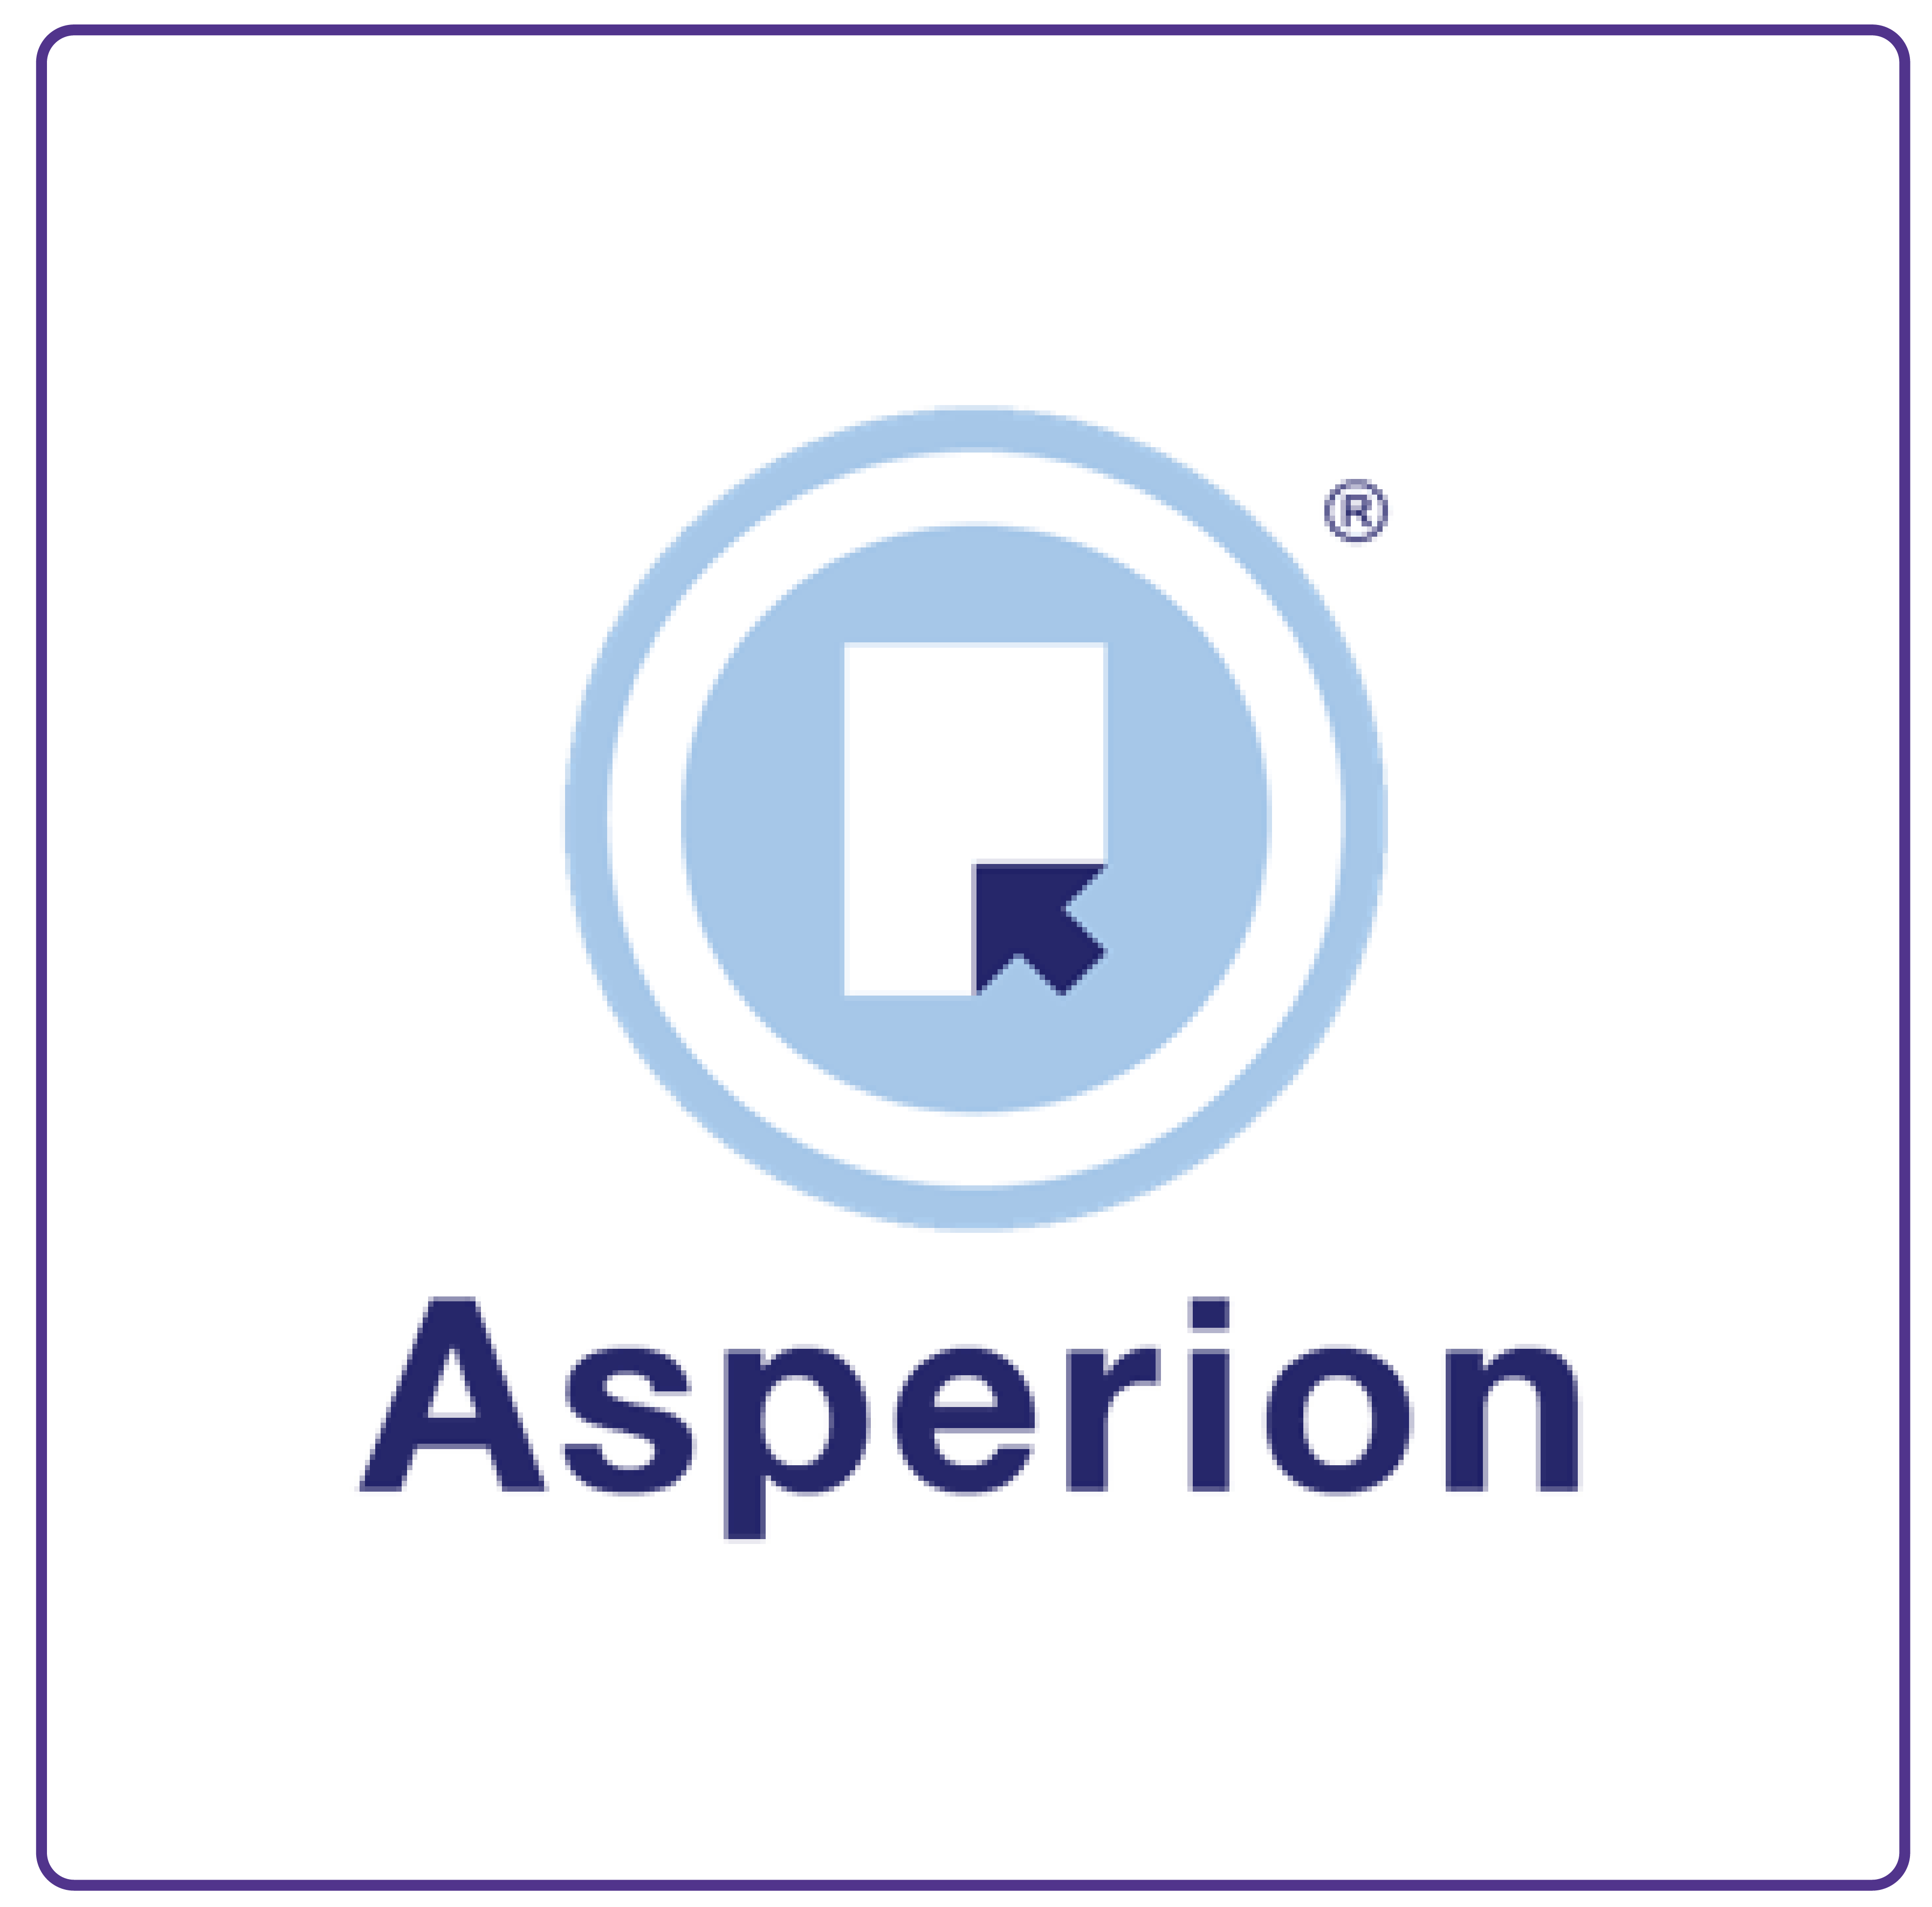 Asperion main image